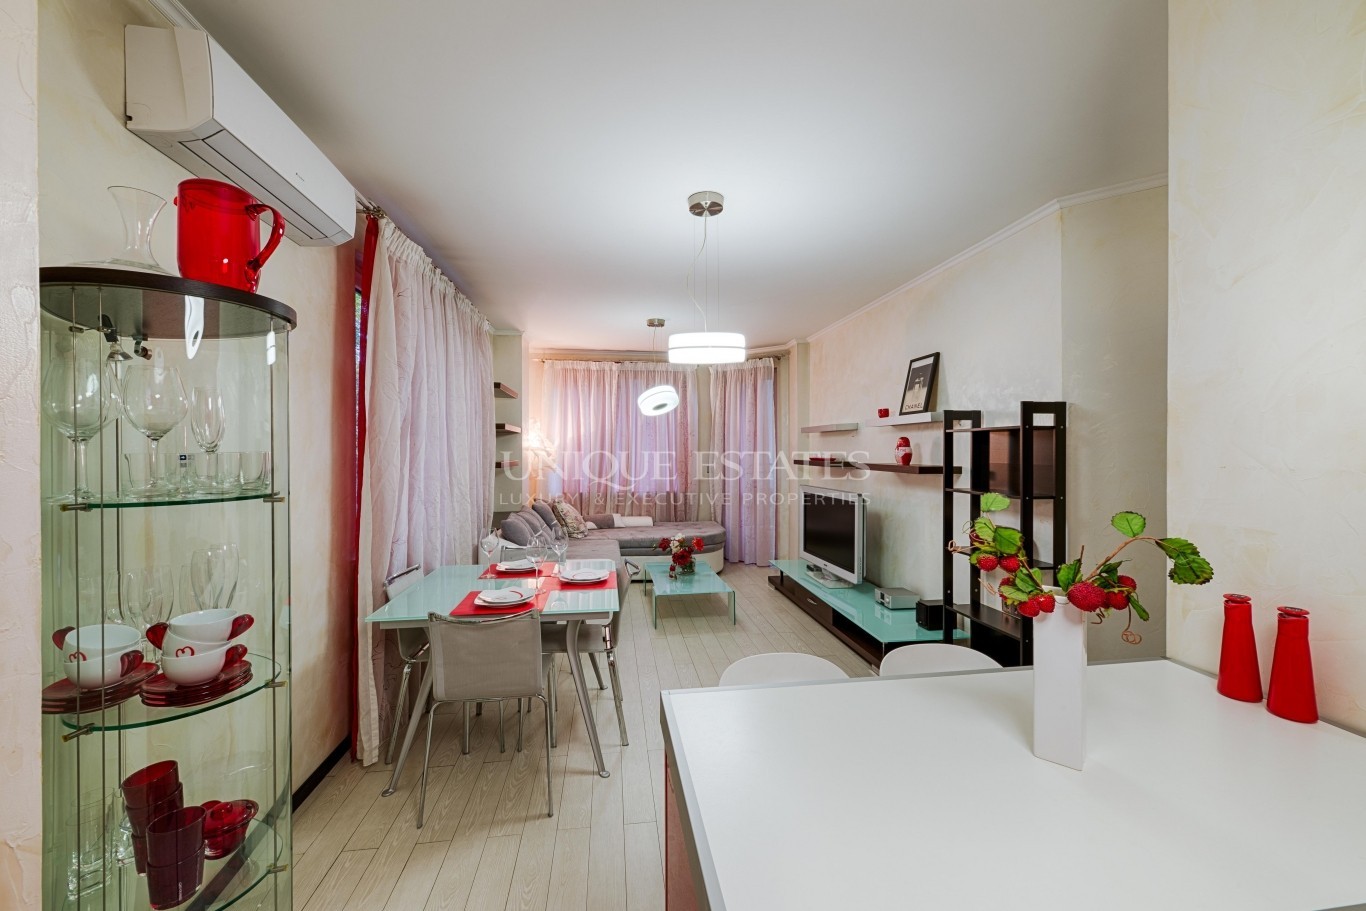 Апартамент под наем в София, Лозенец - код на имота: K8709 - image 3